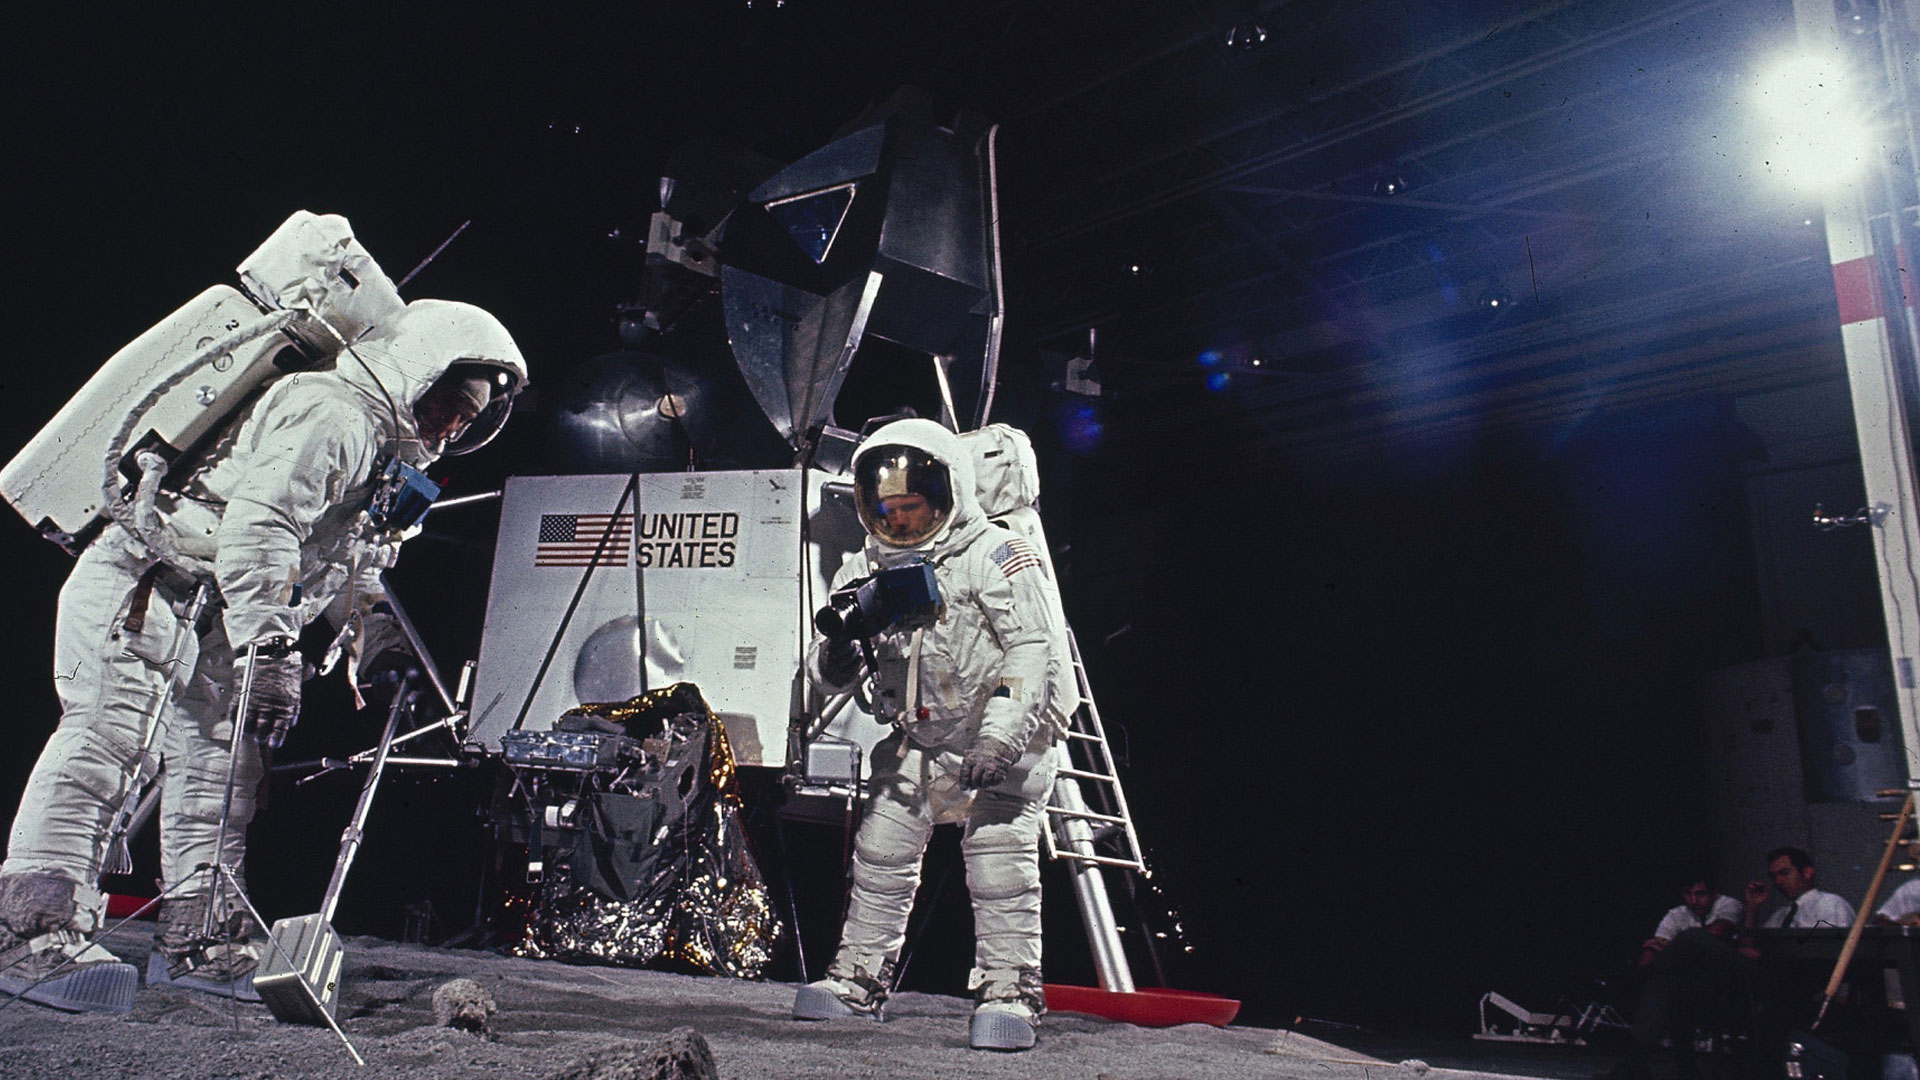 Космический полет на луну. Аполлон 11 1969. Американцы на Луне 1969. Астронавты на Луне.